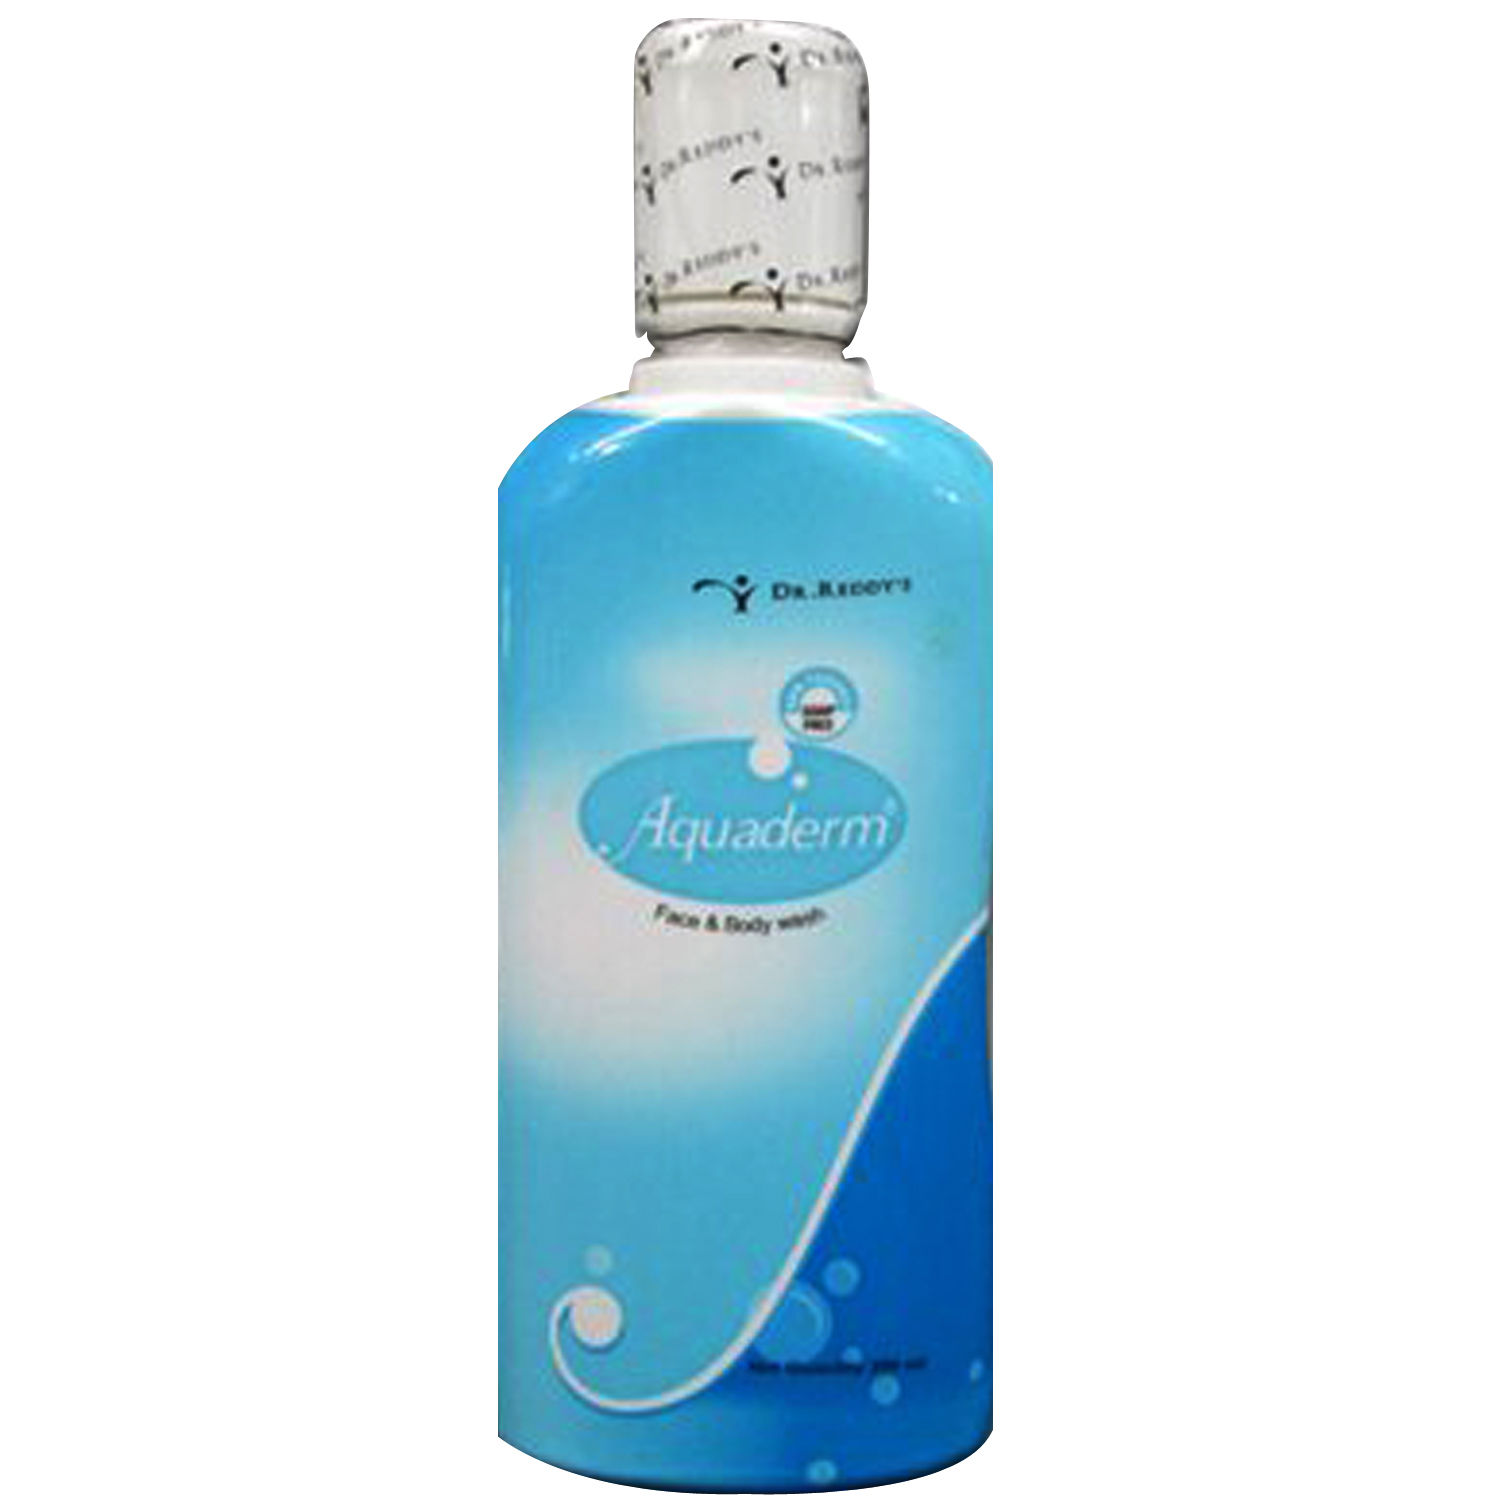 Aquaderma Face & Body Wash, 200 ml, Pack of 1 